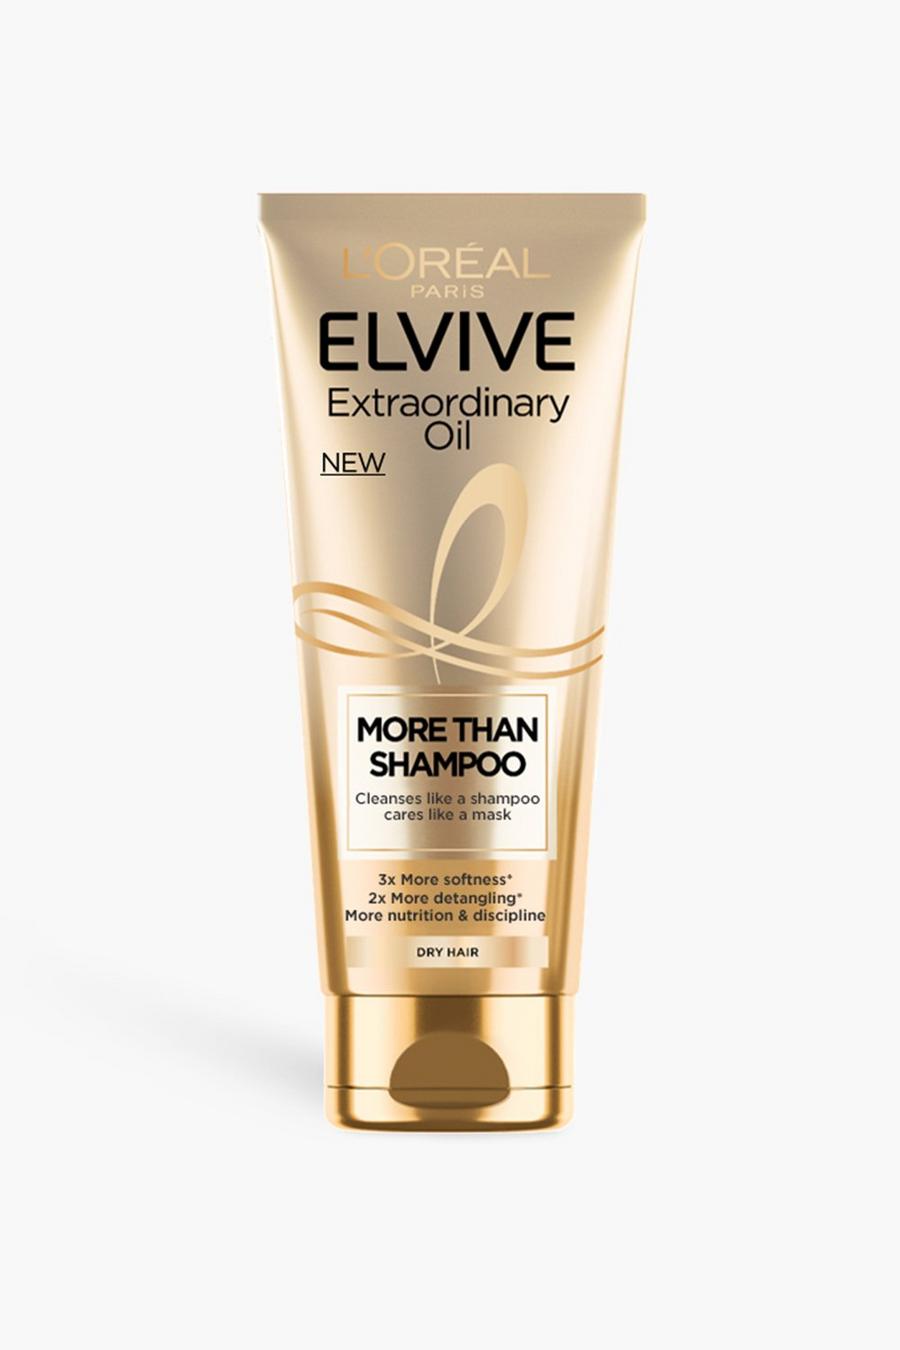 Shampoo Extraordinary Oil L’Oreal Elvive, Oro metálicos